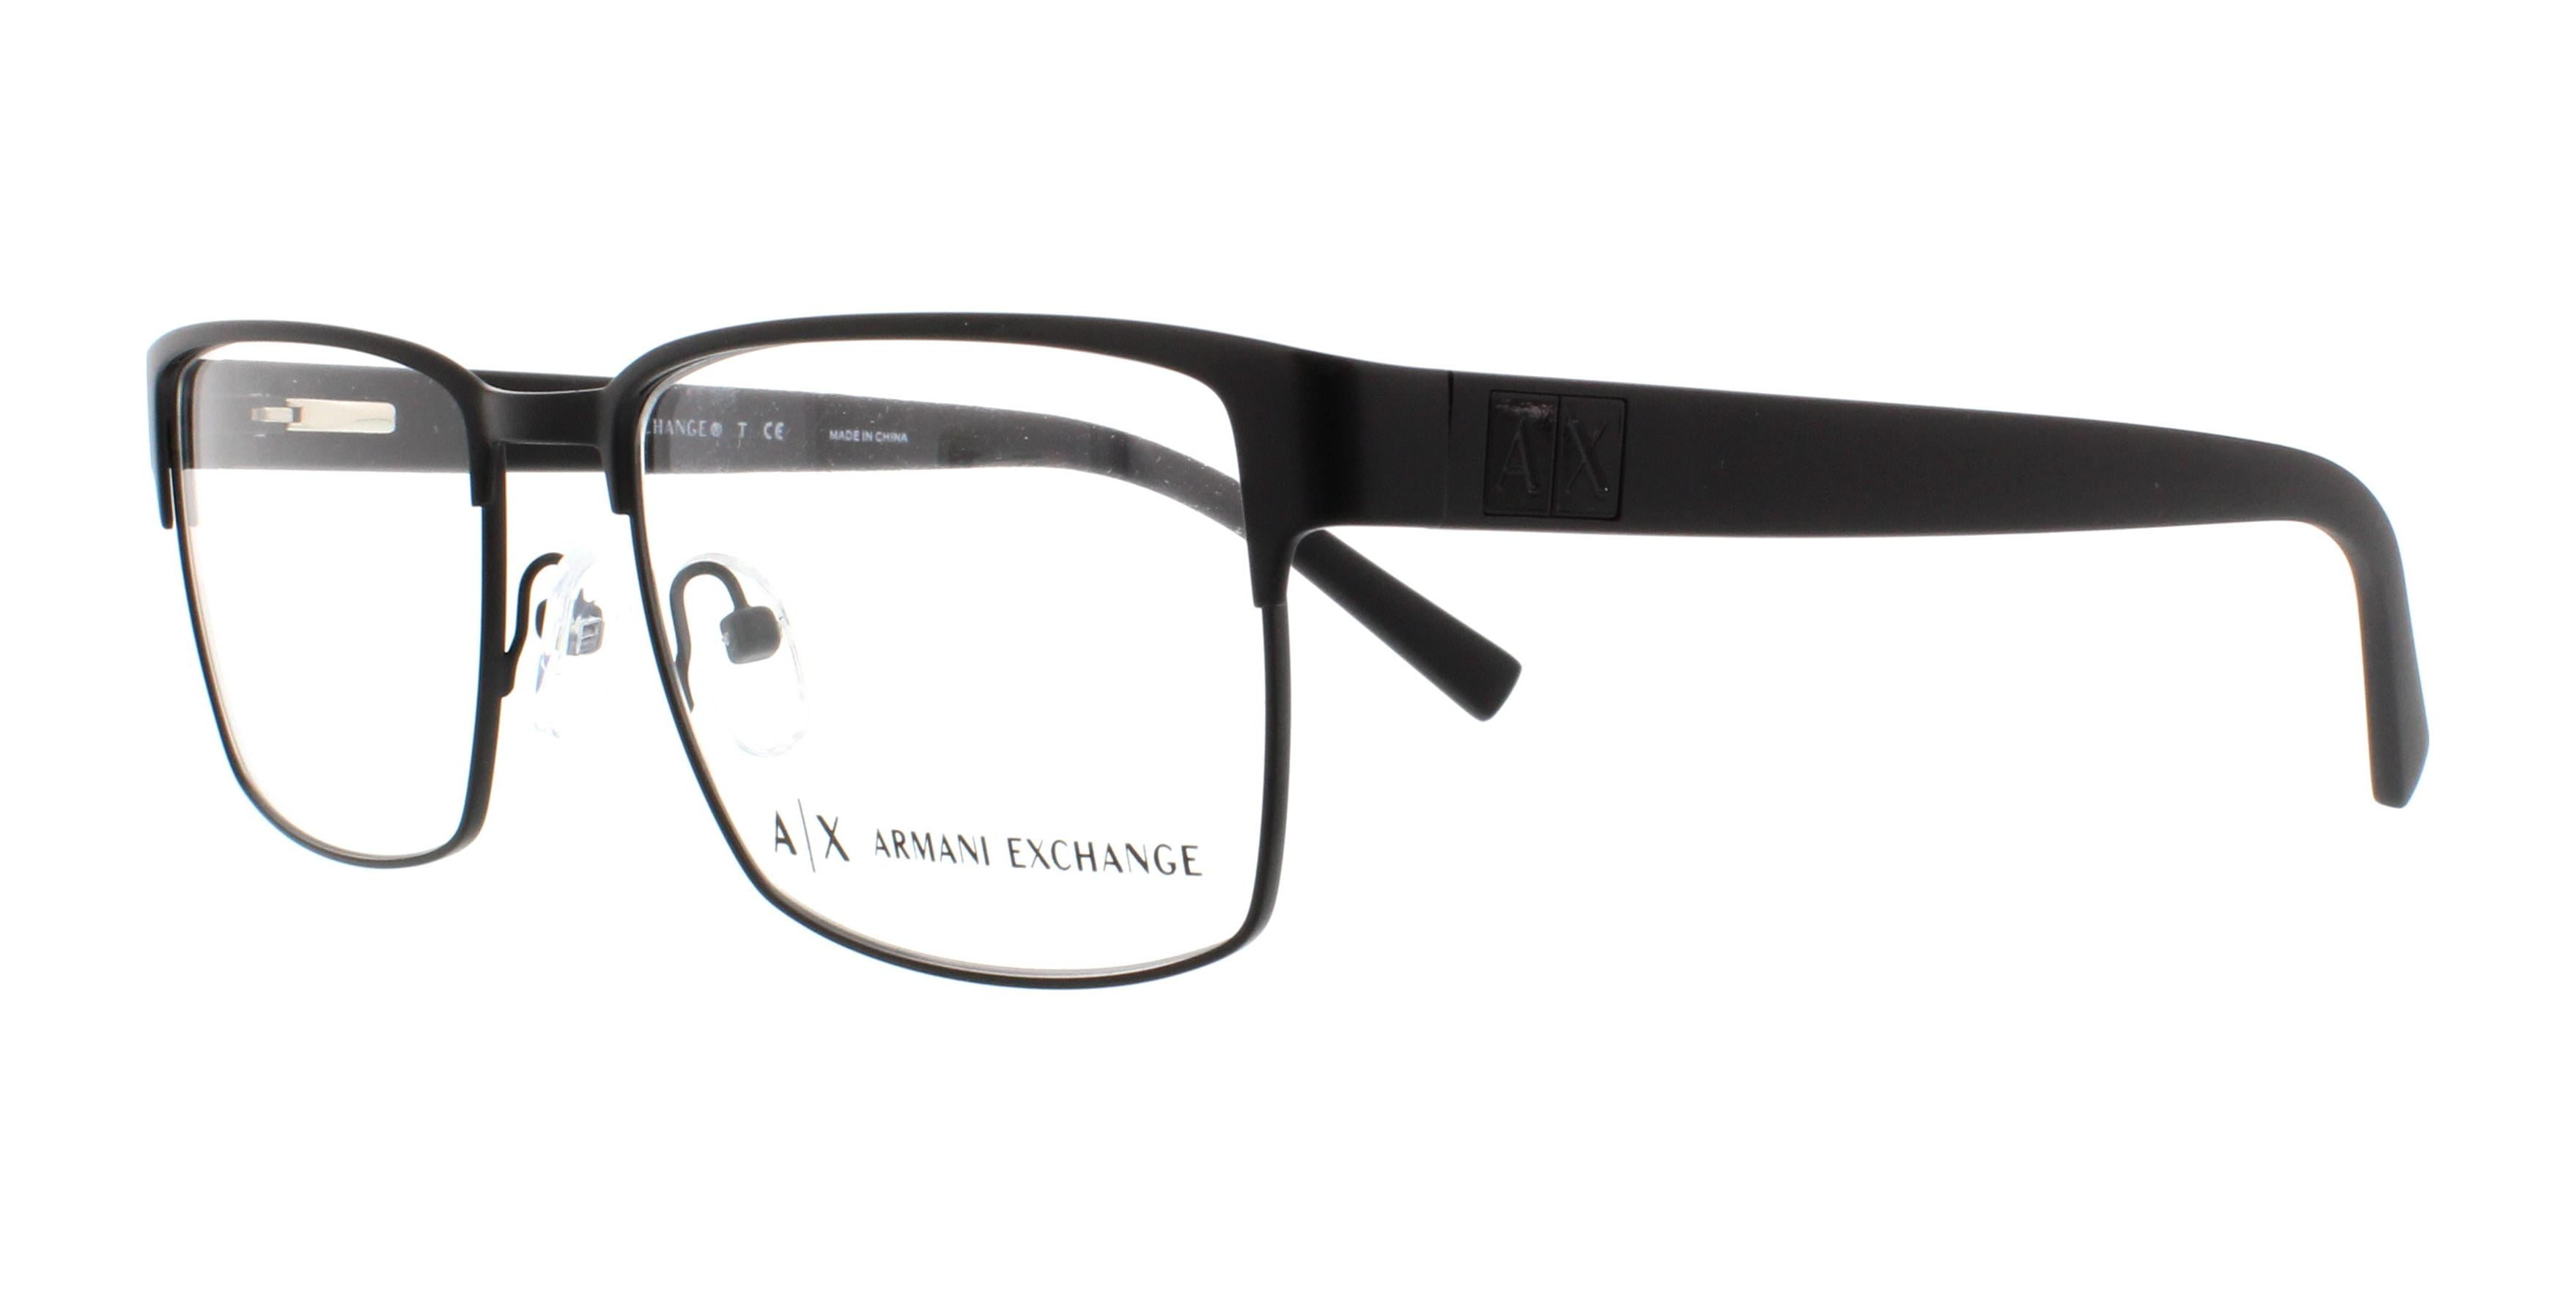 ax armani exchange glasses